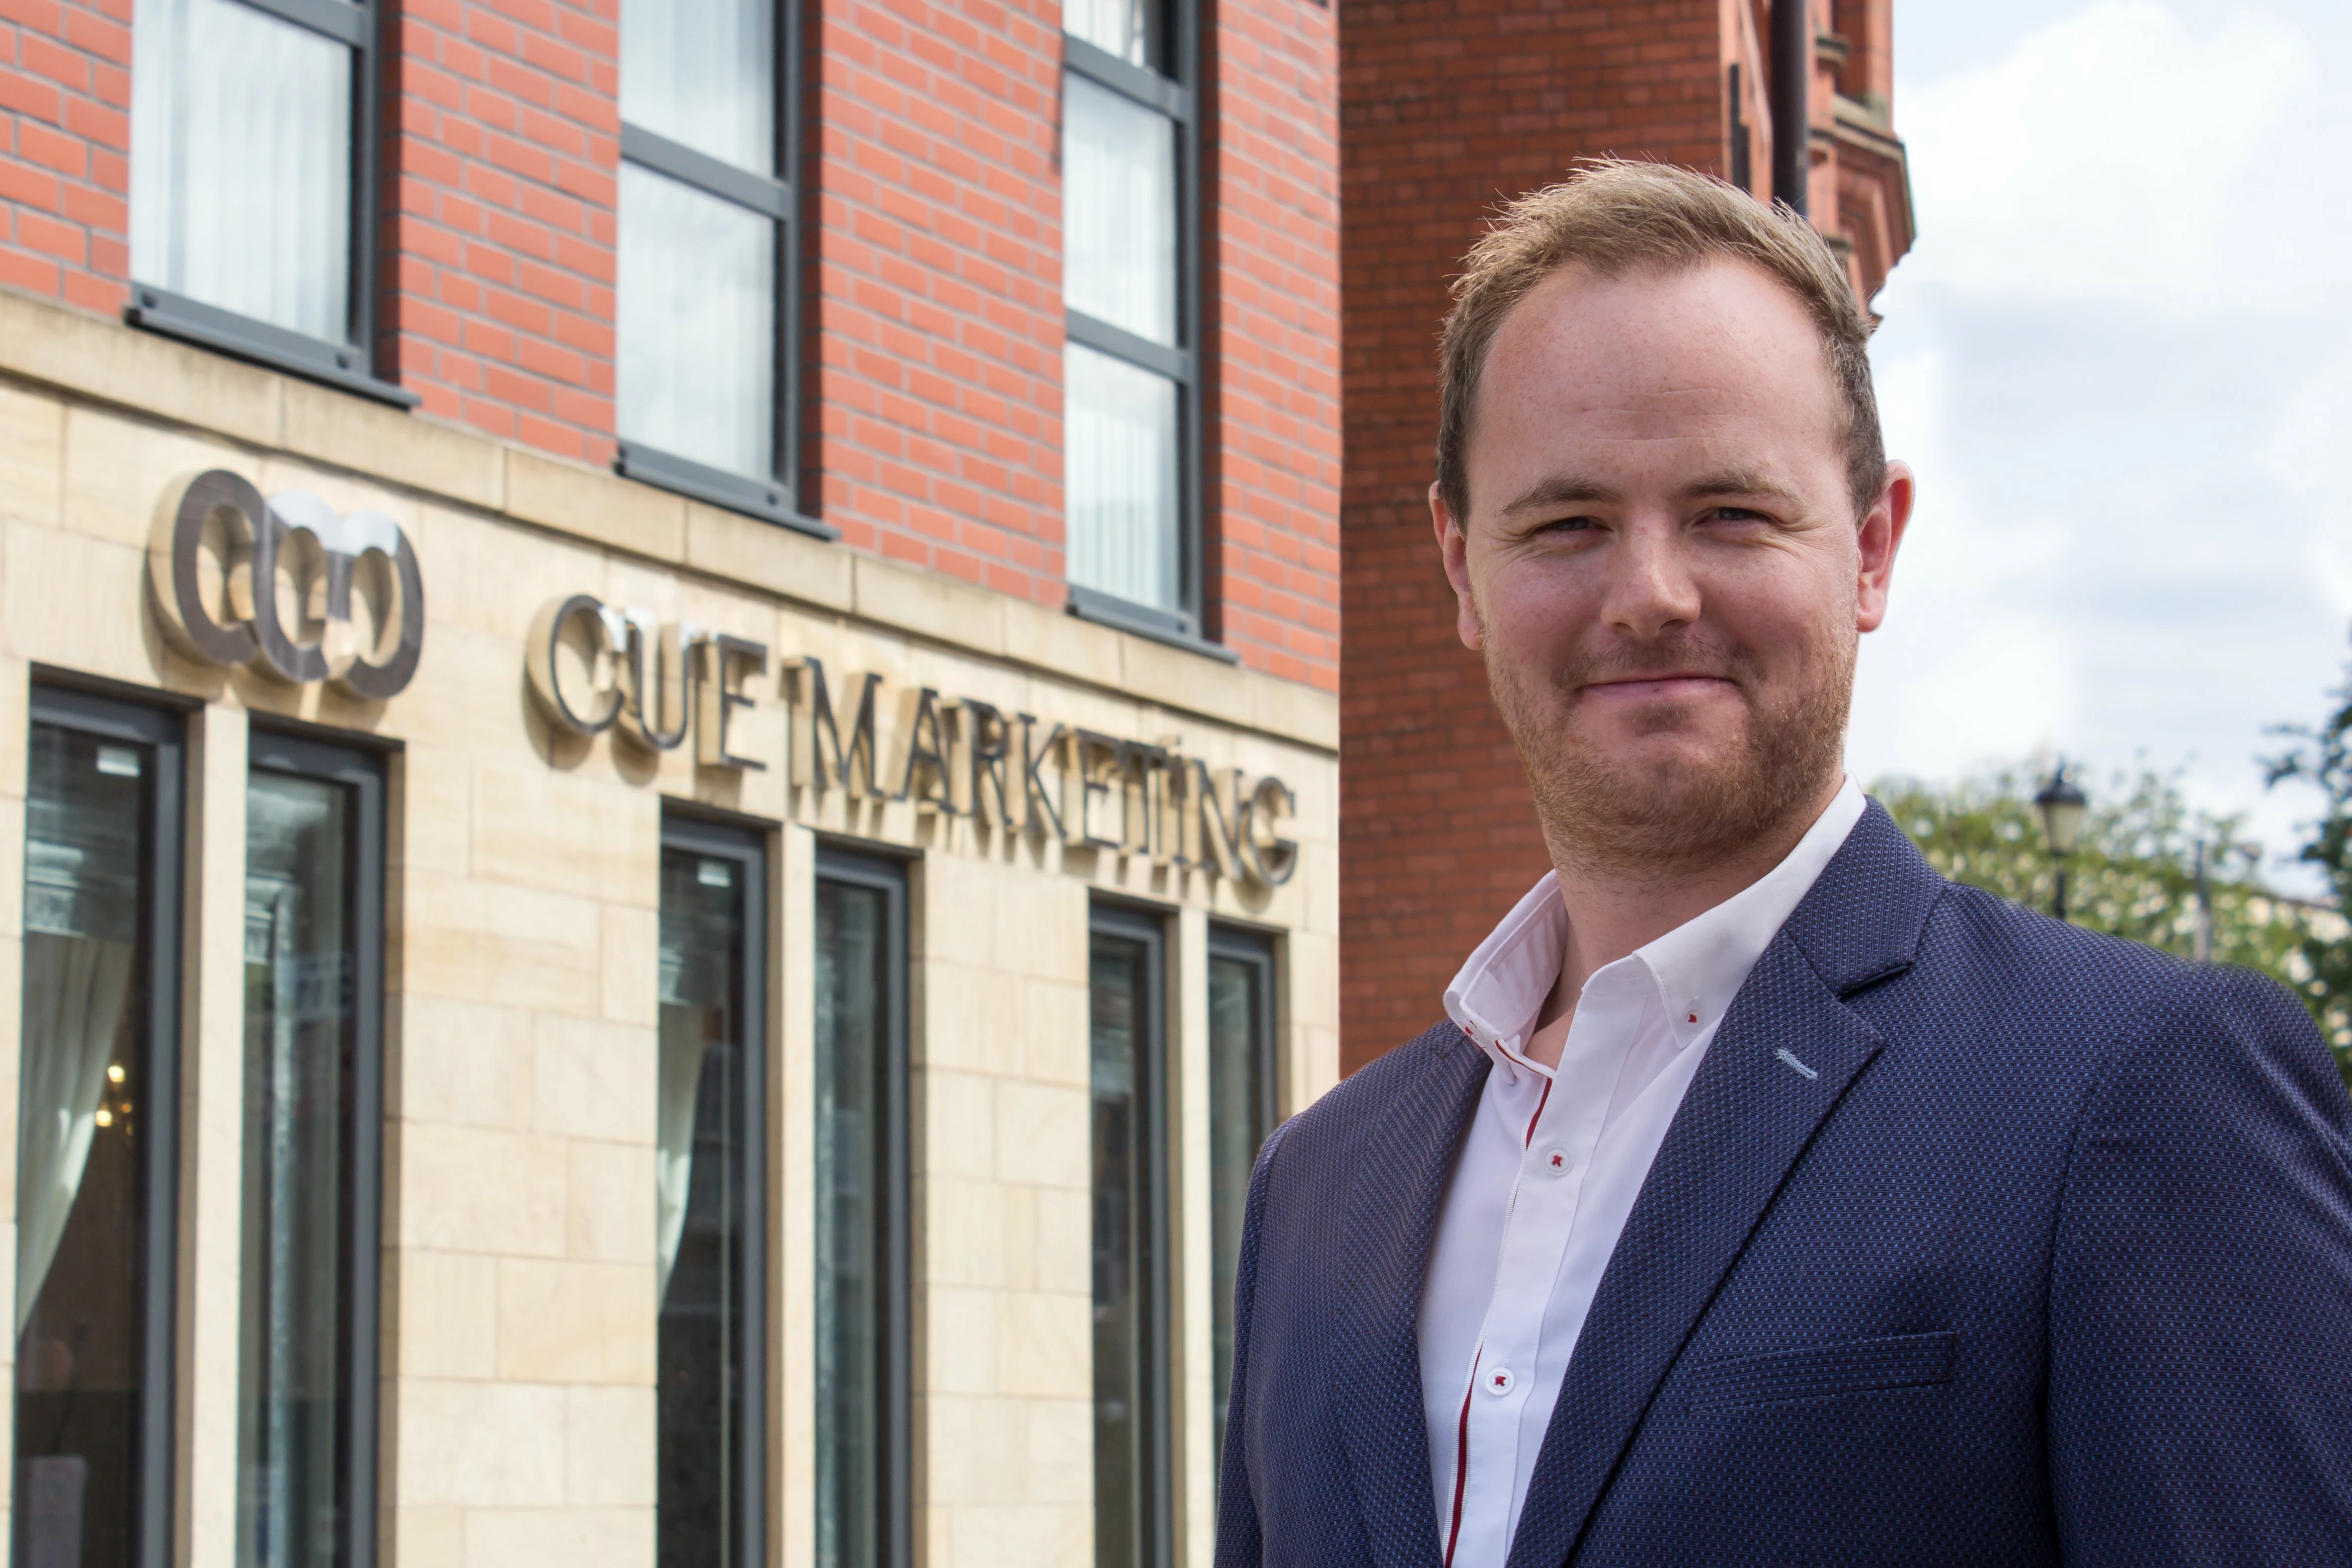 Managing Director of Cue Marketing, Nick Boyle